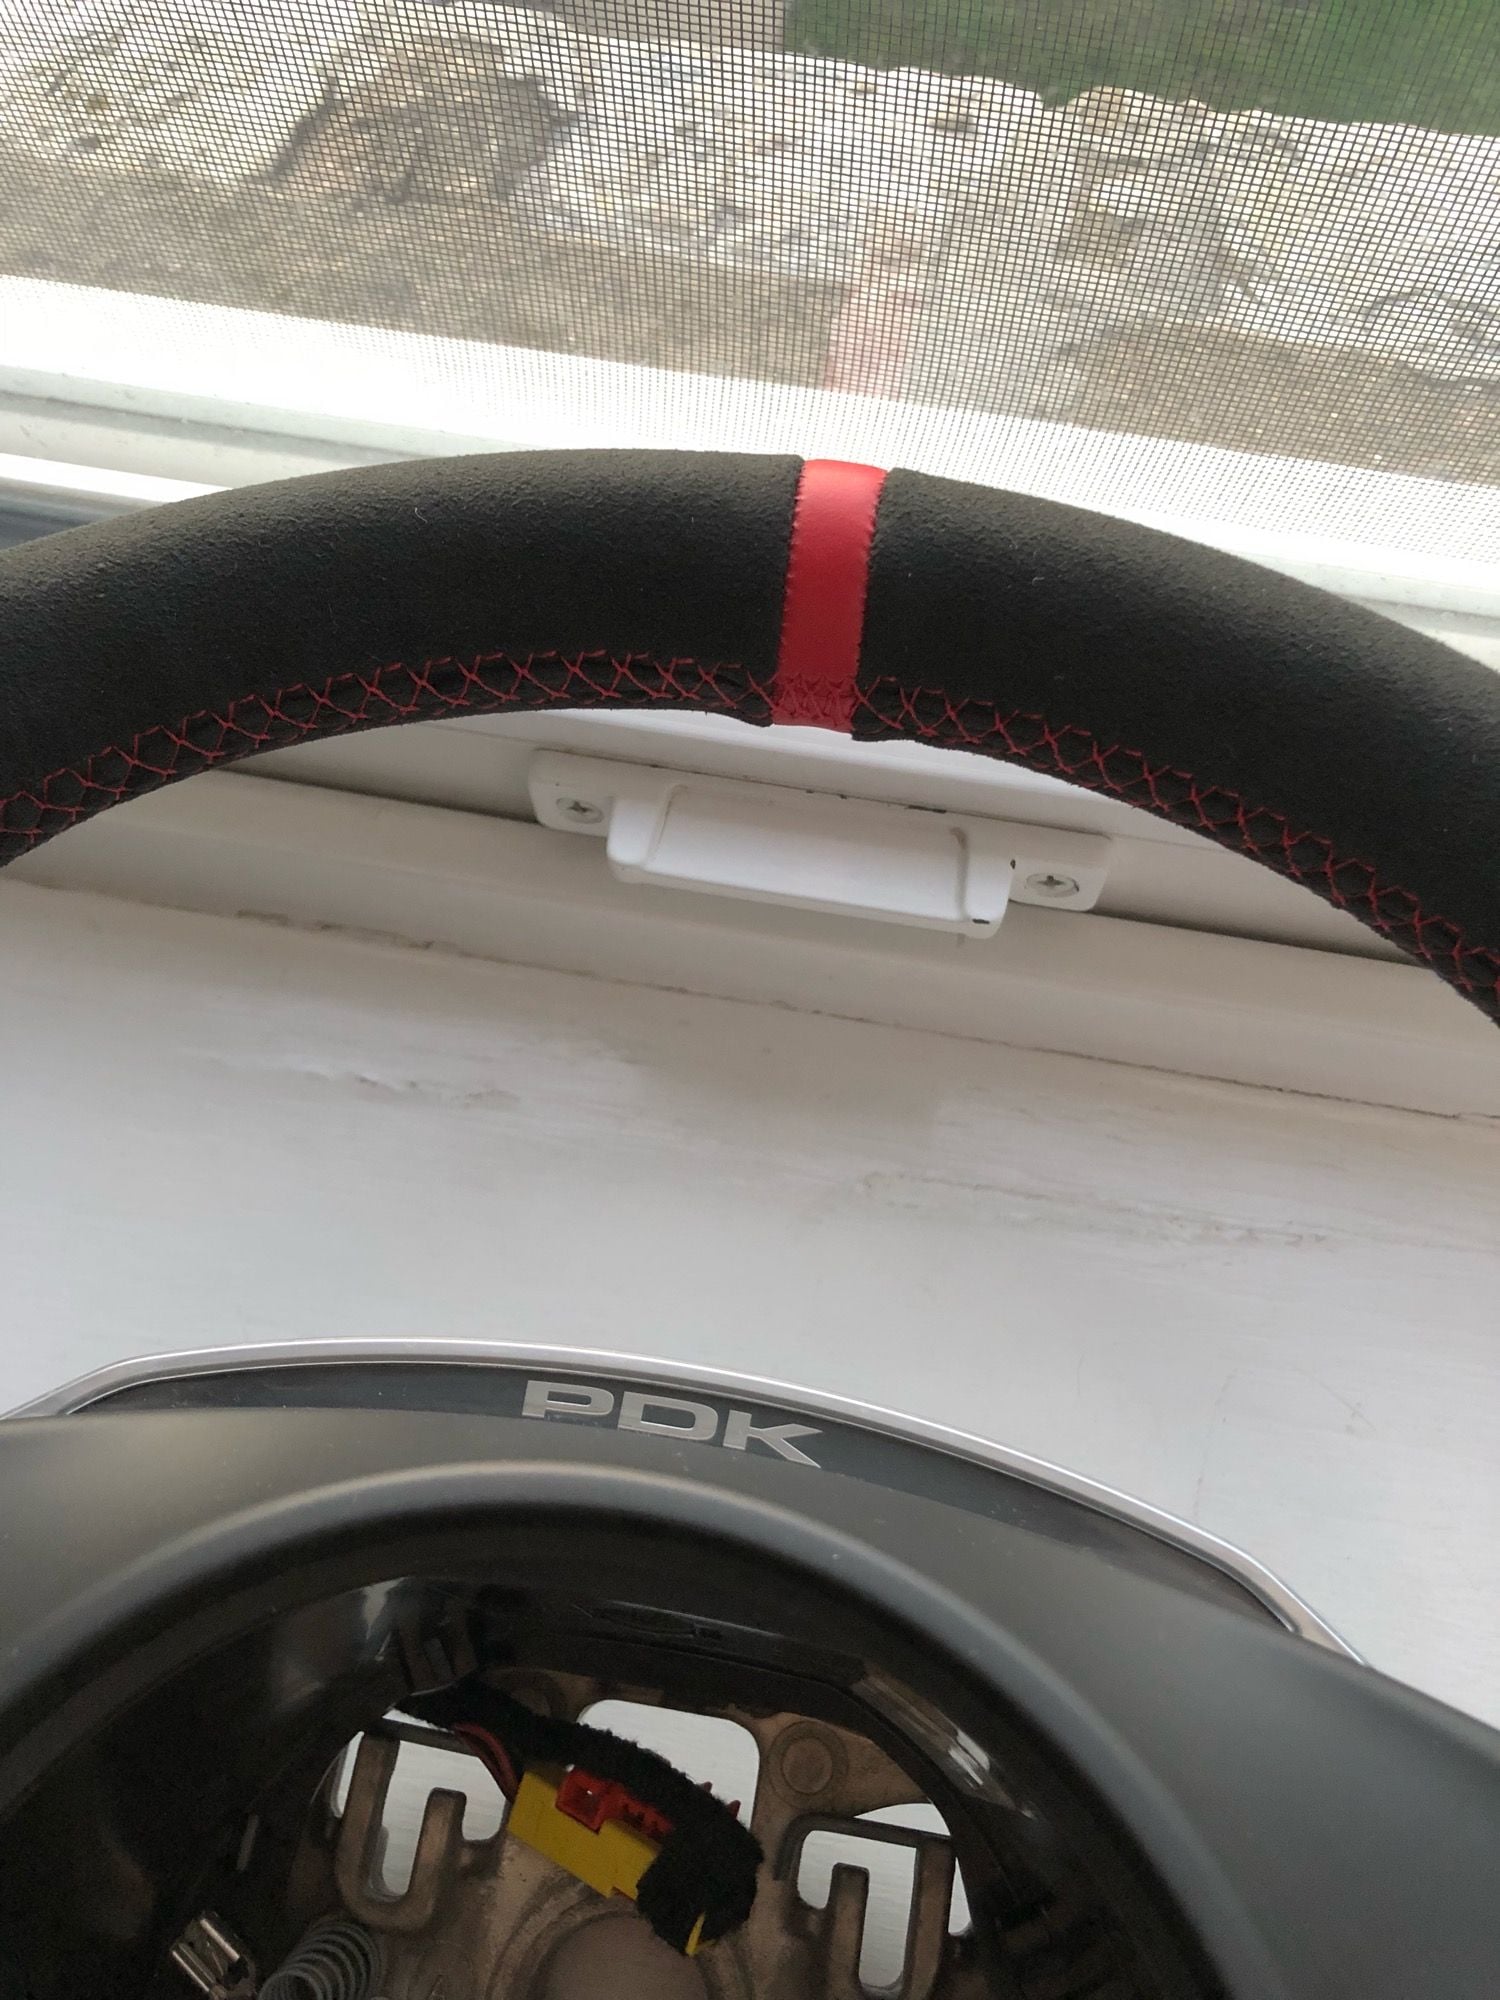 Interior/Upholstery - Porsche 991 Steering wheel. Alcantara. PDK. Heated. - Used - 2012 to 2015 Porsche 911 - Philadelphia, PA 19115, United States